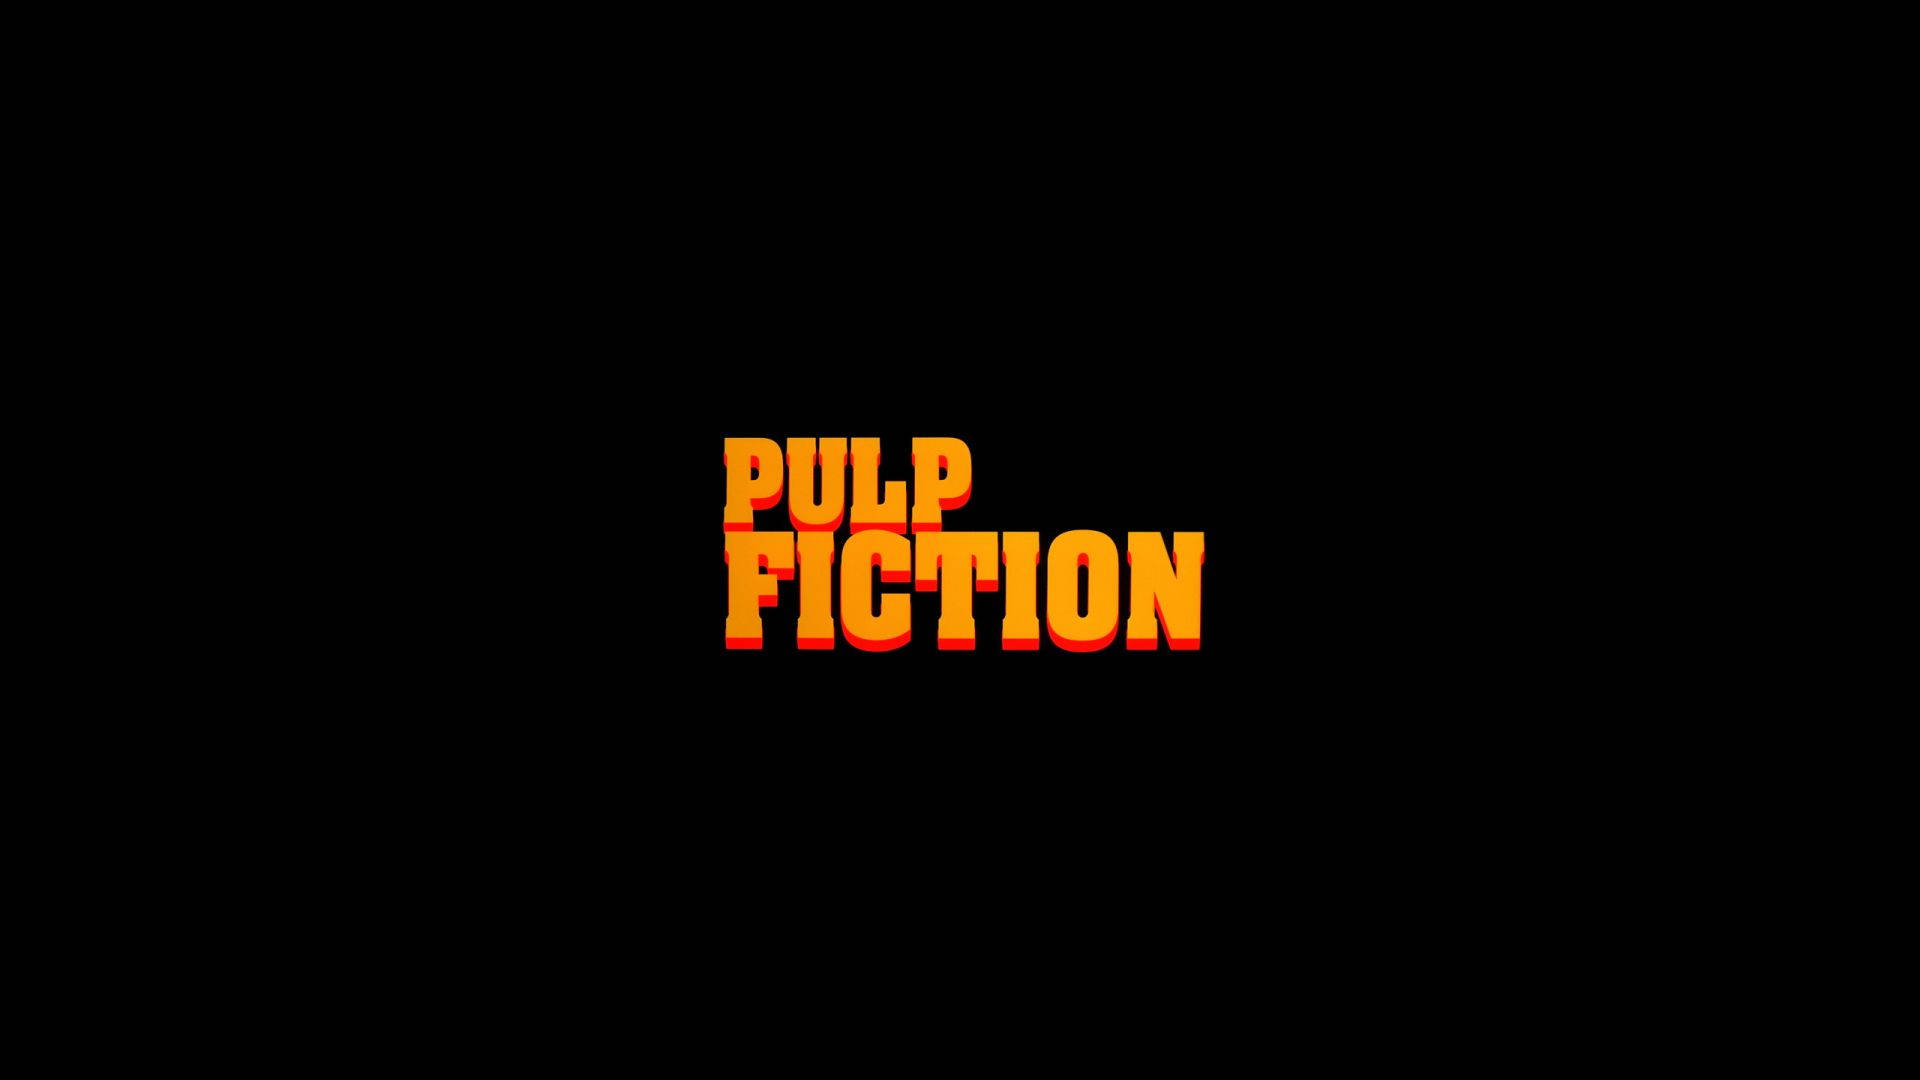 Imágenes De Pulp Fiction